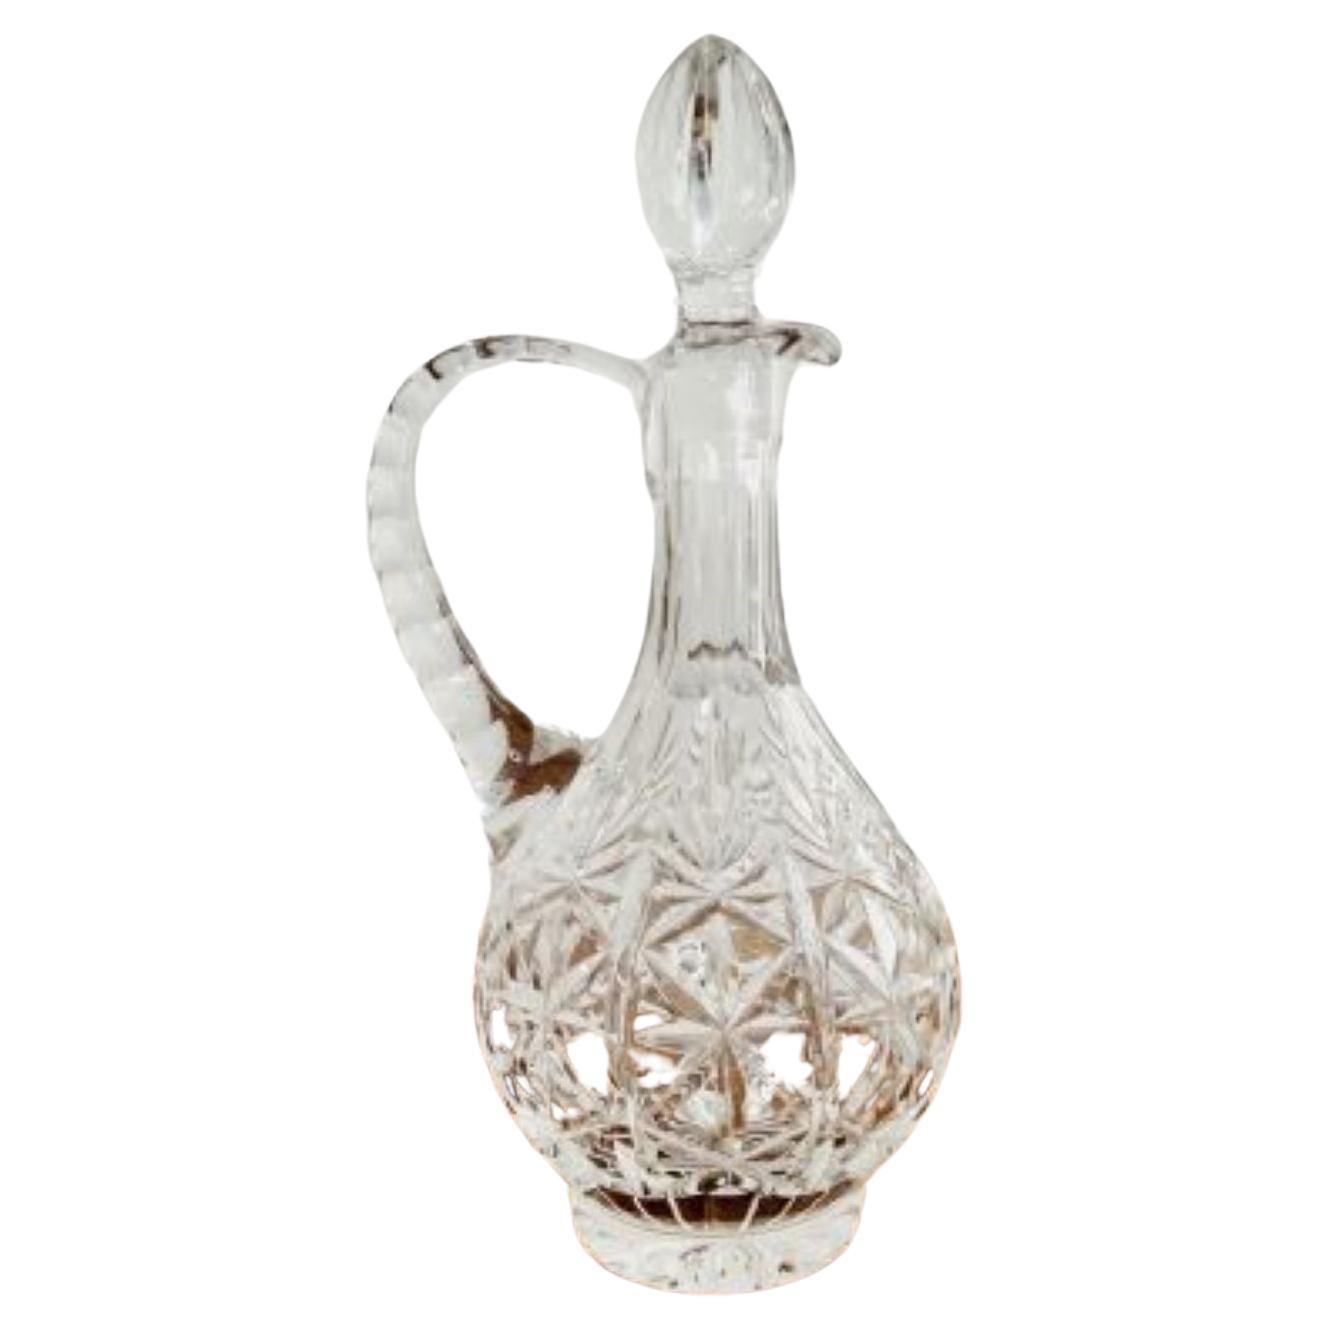 Stunning quality antique Edwardian cut glass ewer